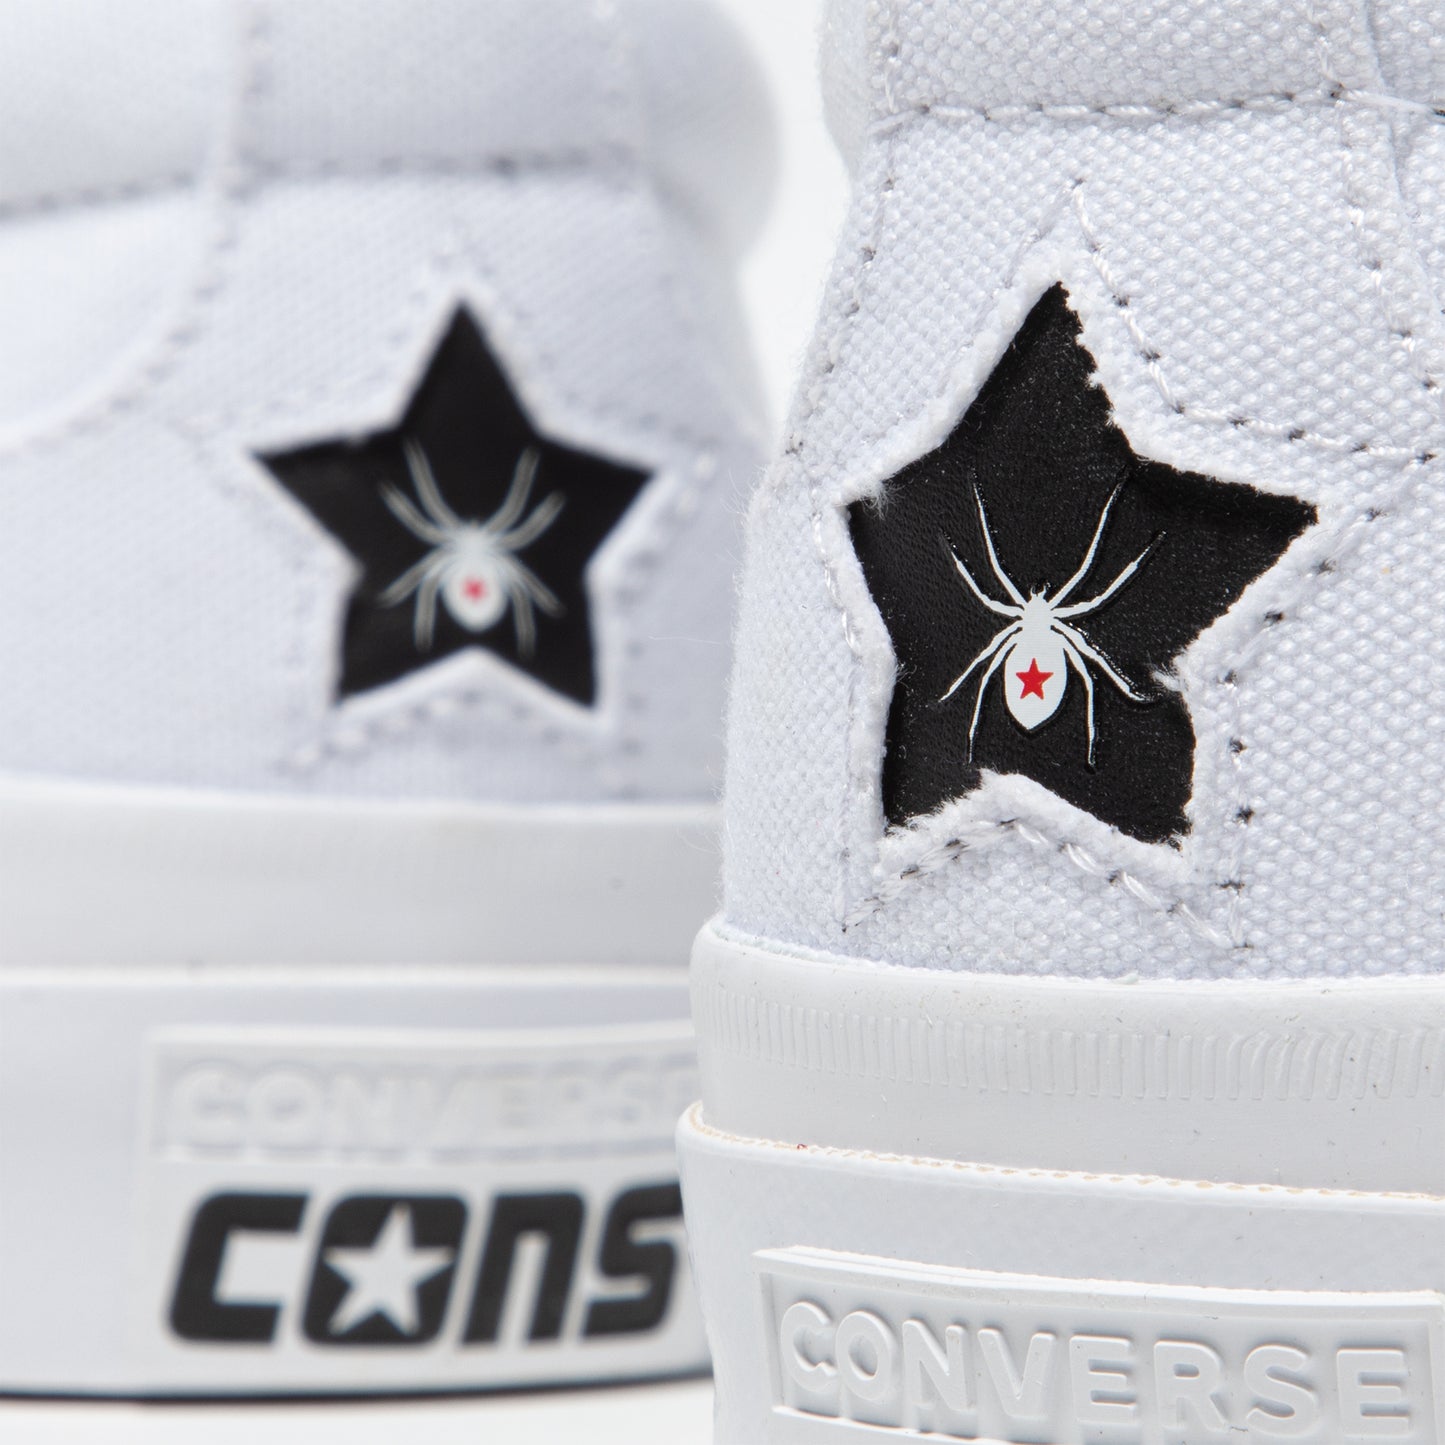 Converse One Star CC Slip Pro (White/Black)